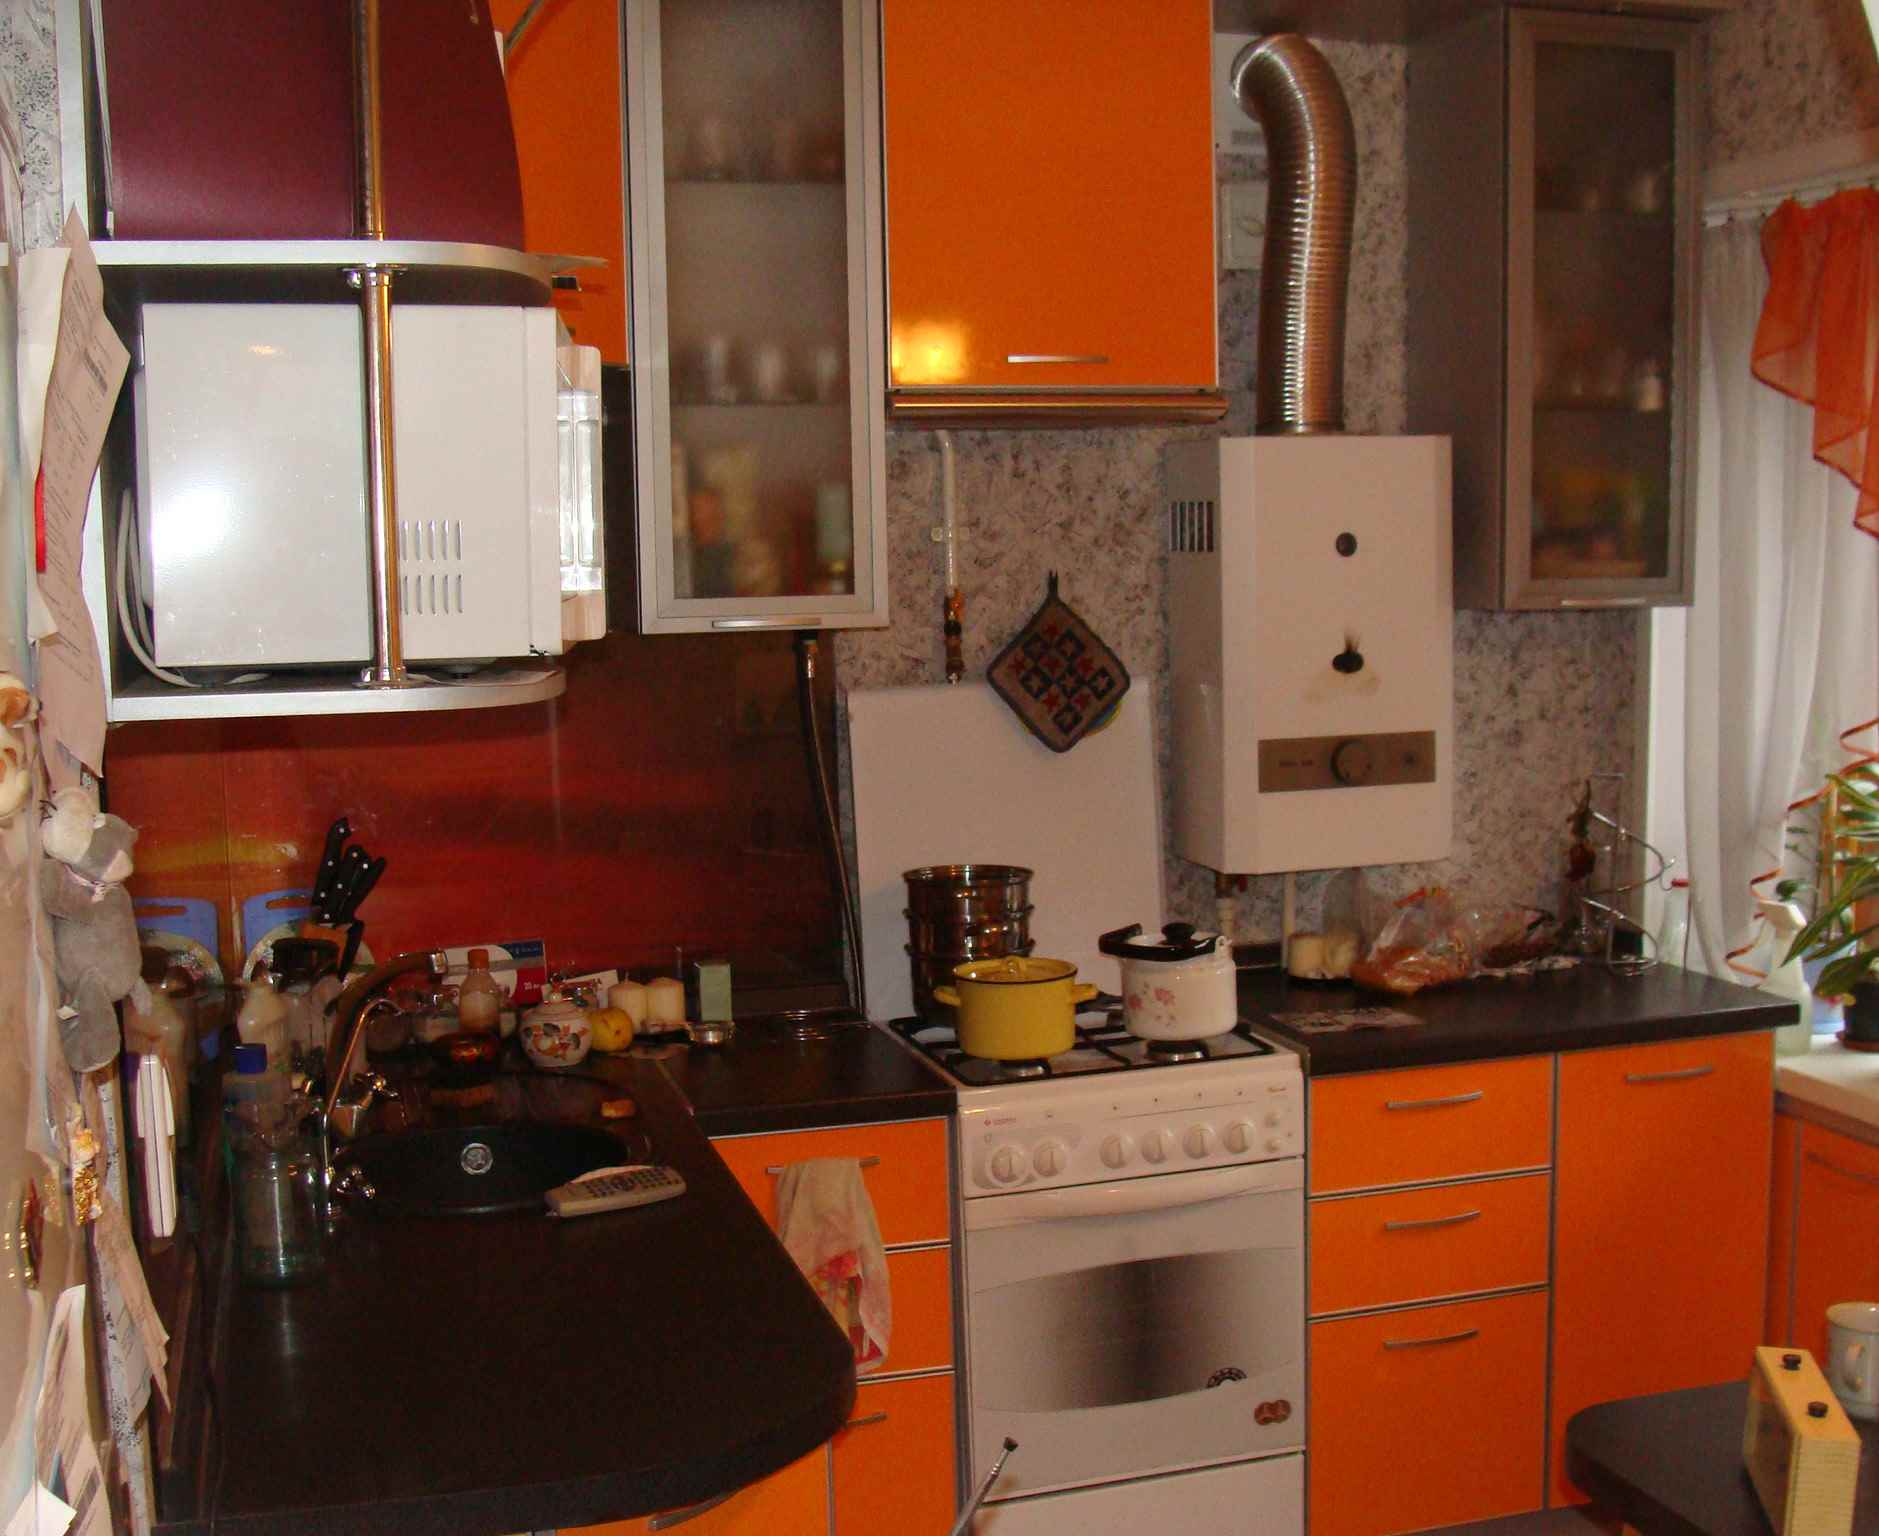 Un esempio di arredamento da cucina leggero con scaldabagno a gas